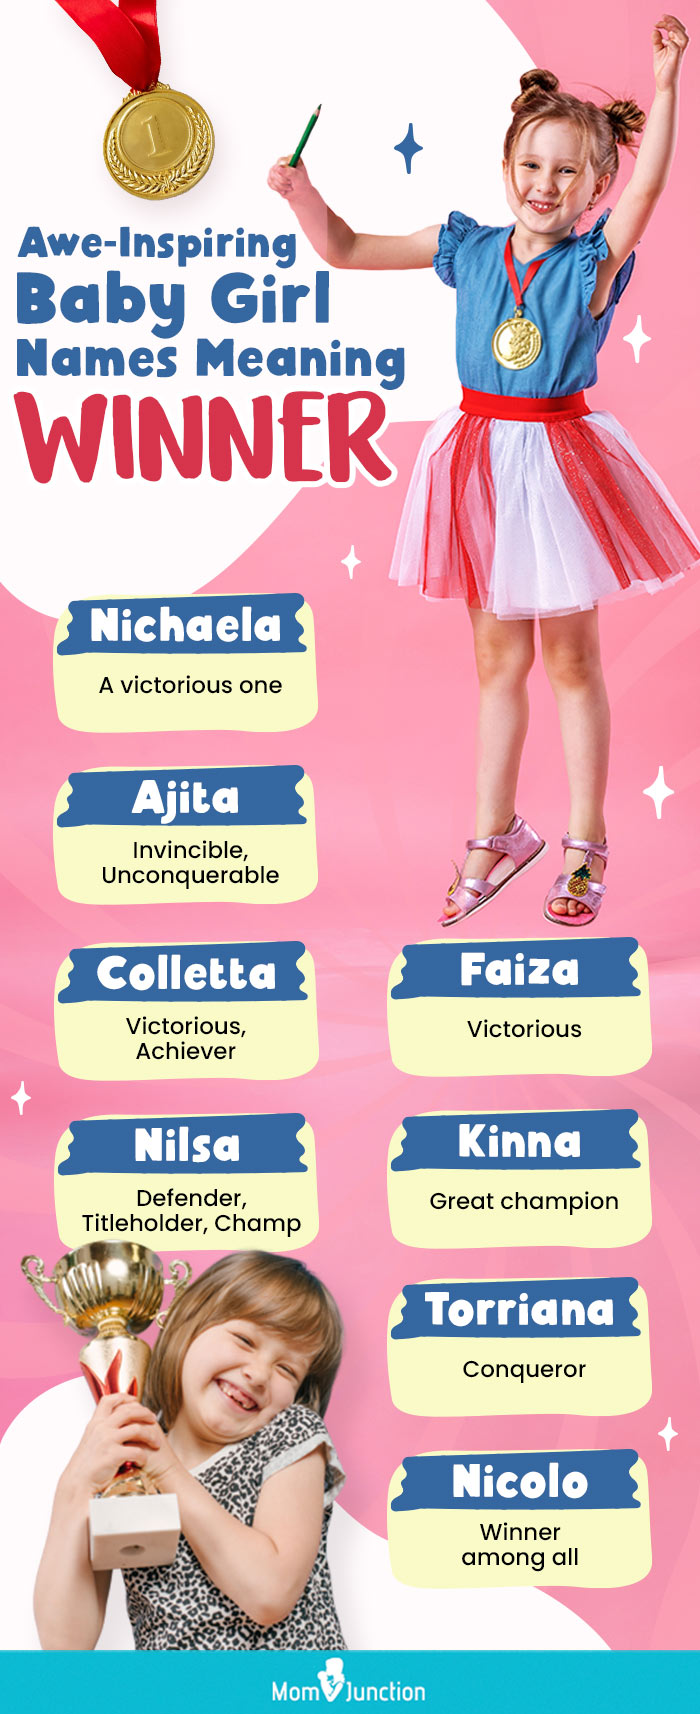 awe inspiring baby girl names meaning winner (infographic)